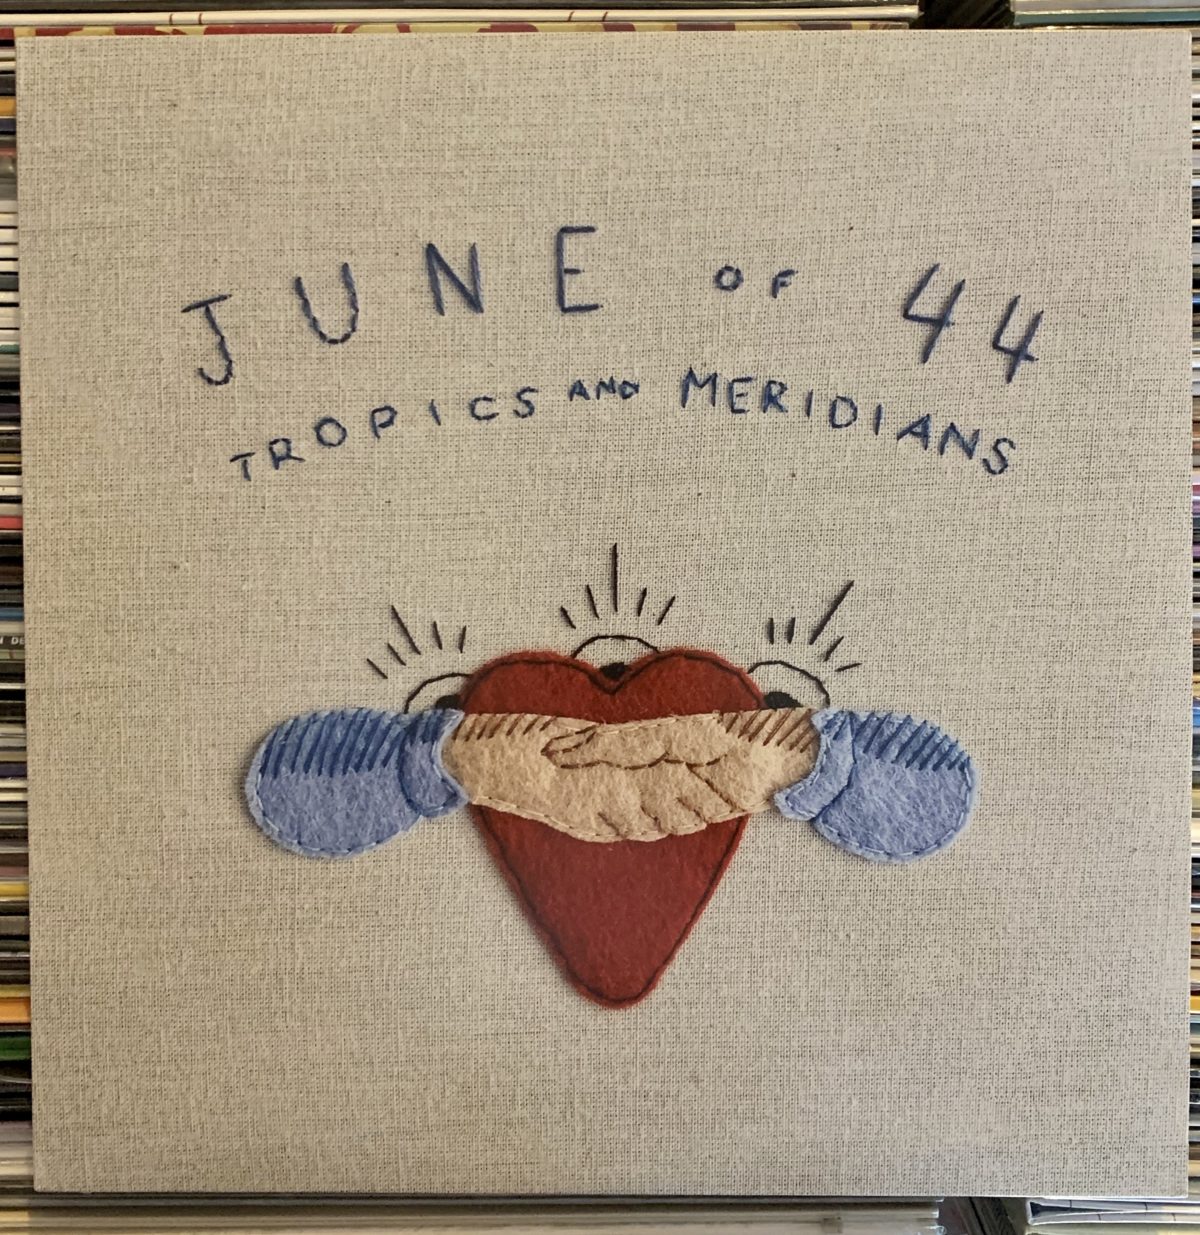 June of 44 – Tropics and Meridians (1996 – RE 2020)